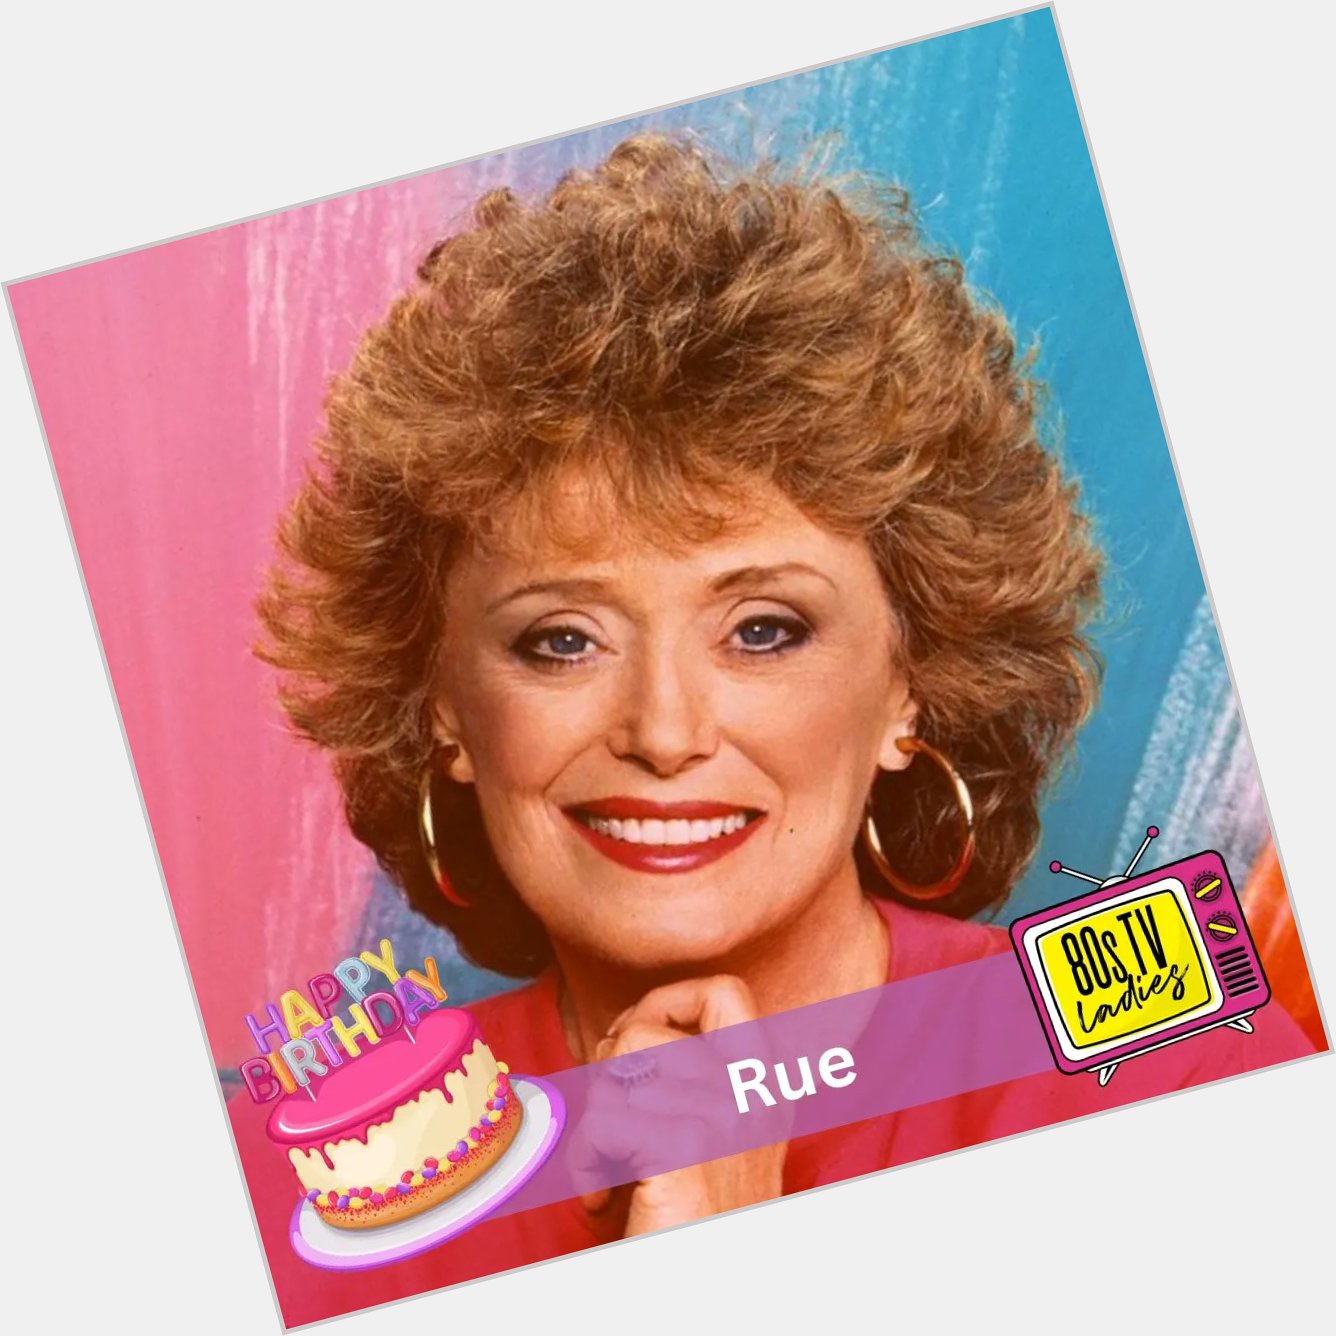 Wishing \80s TV Legend, Rue McClanahan a Happy Heavenly Birthday!  